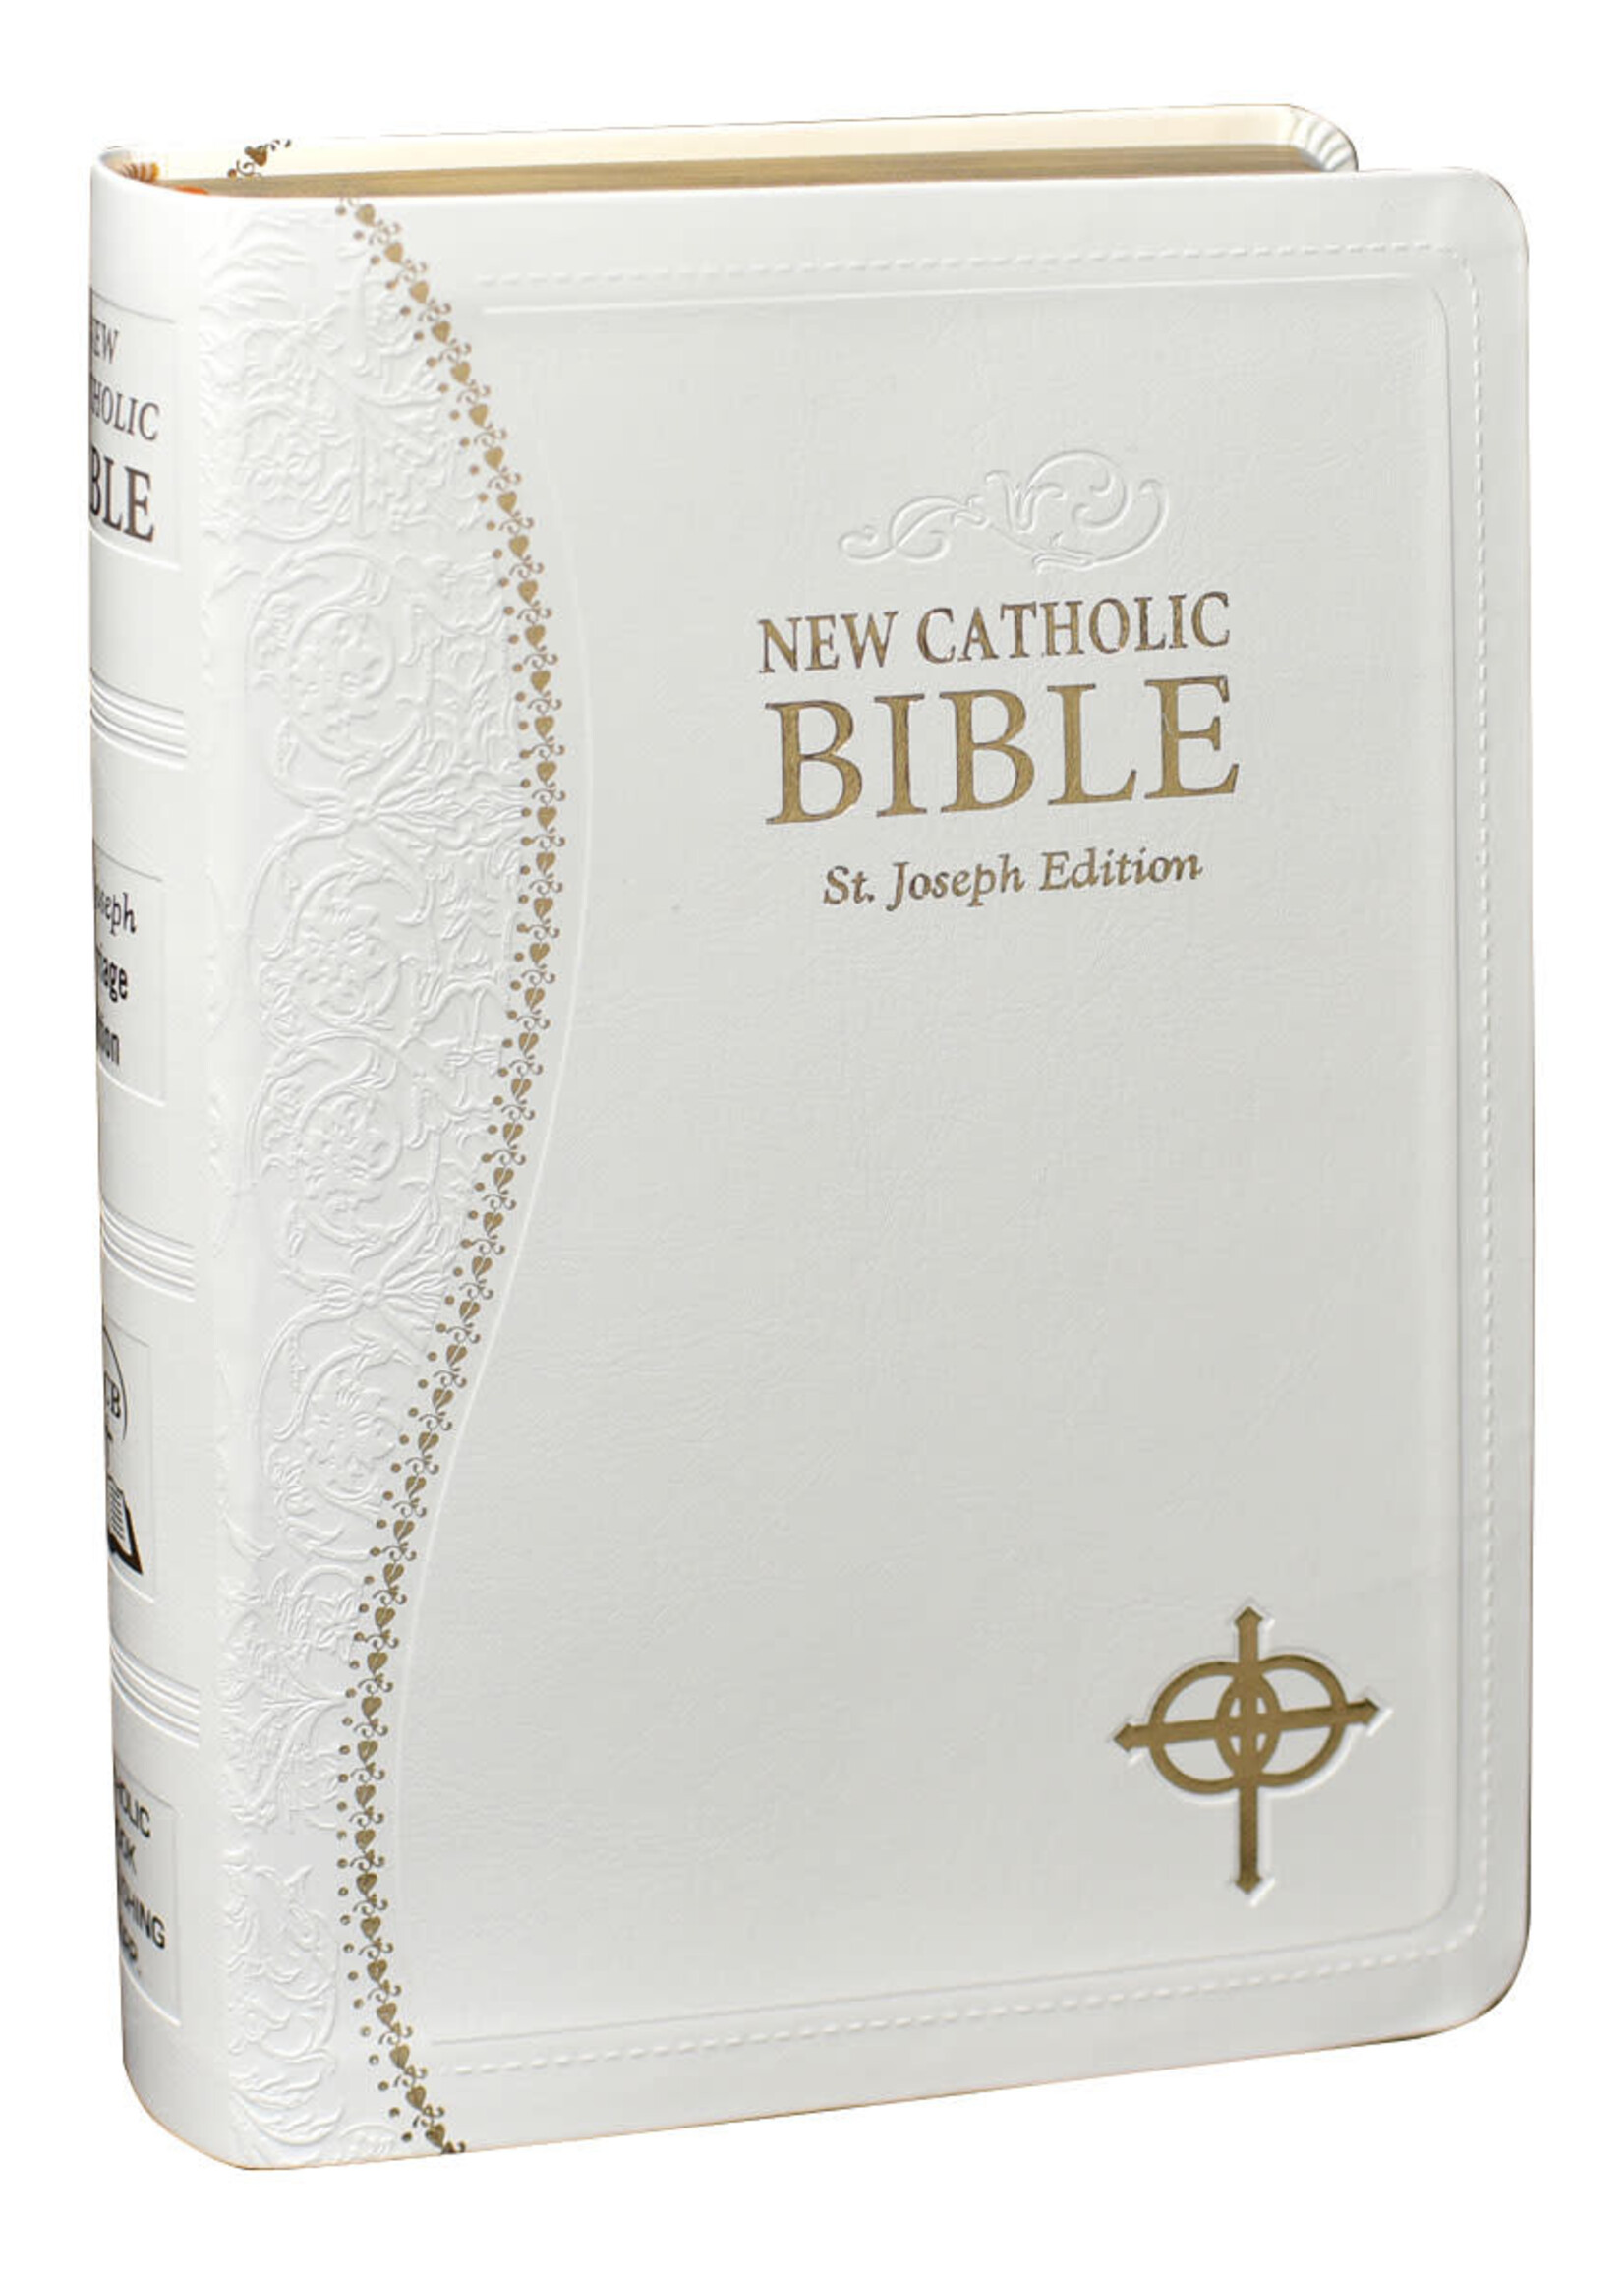 St Joseph New Catholic Bible (Marriage Edition)